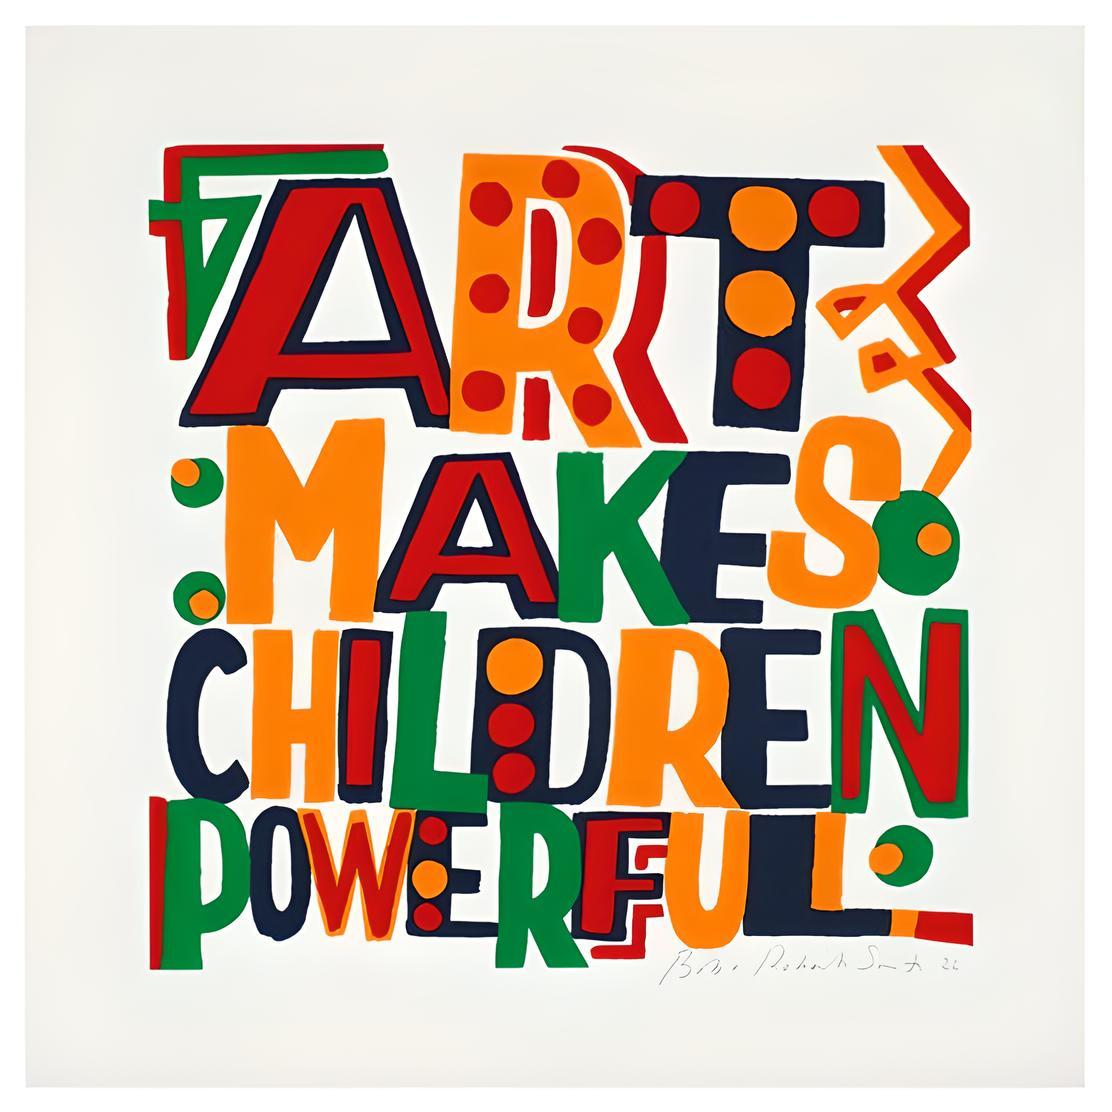 Art Makes Children Powerful